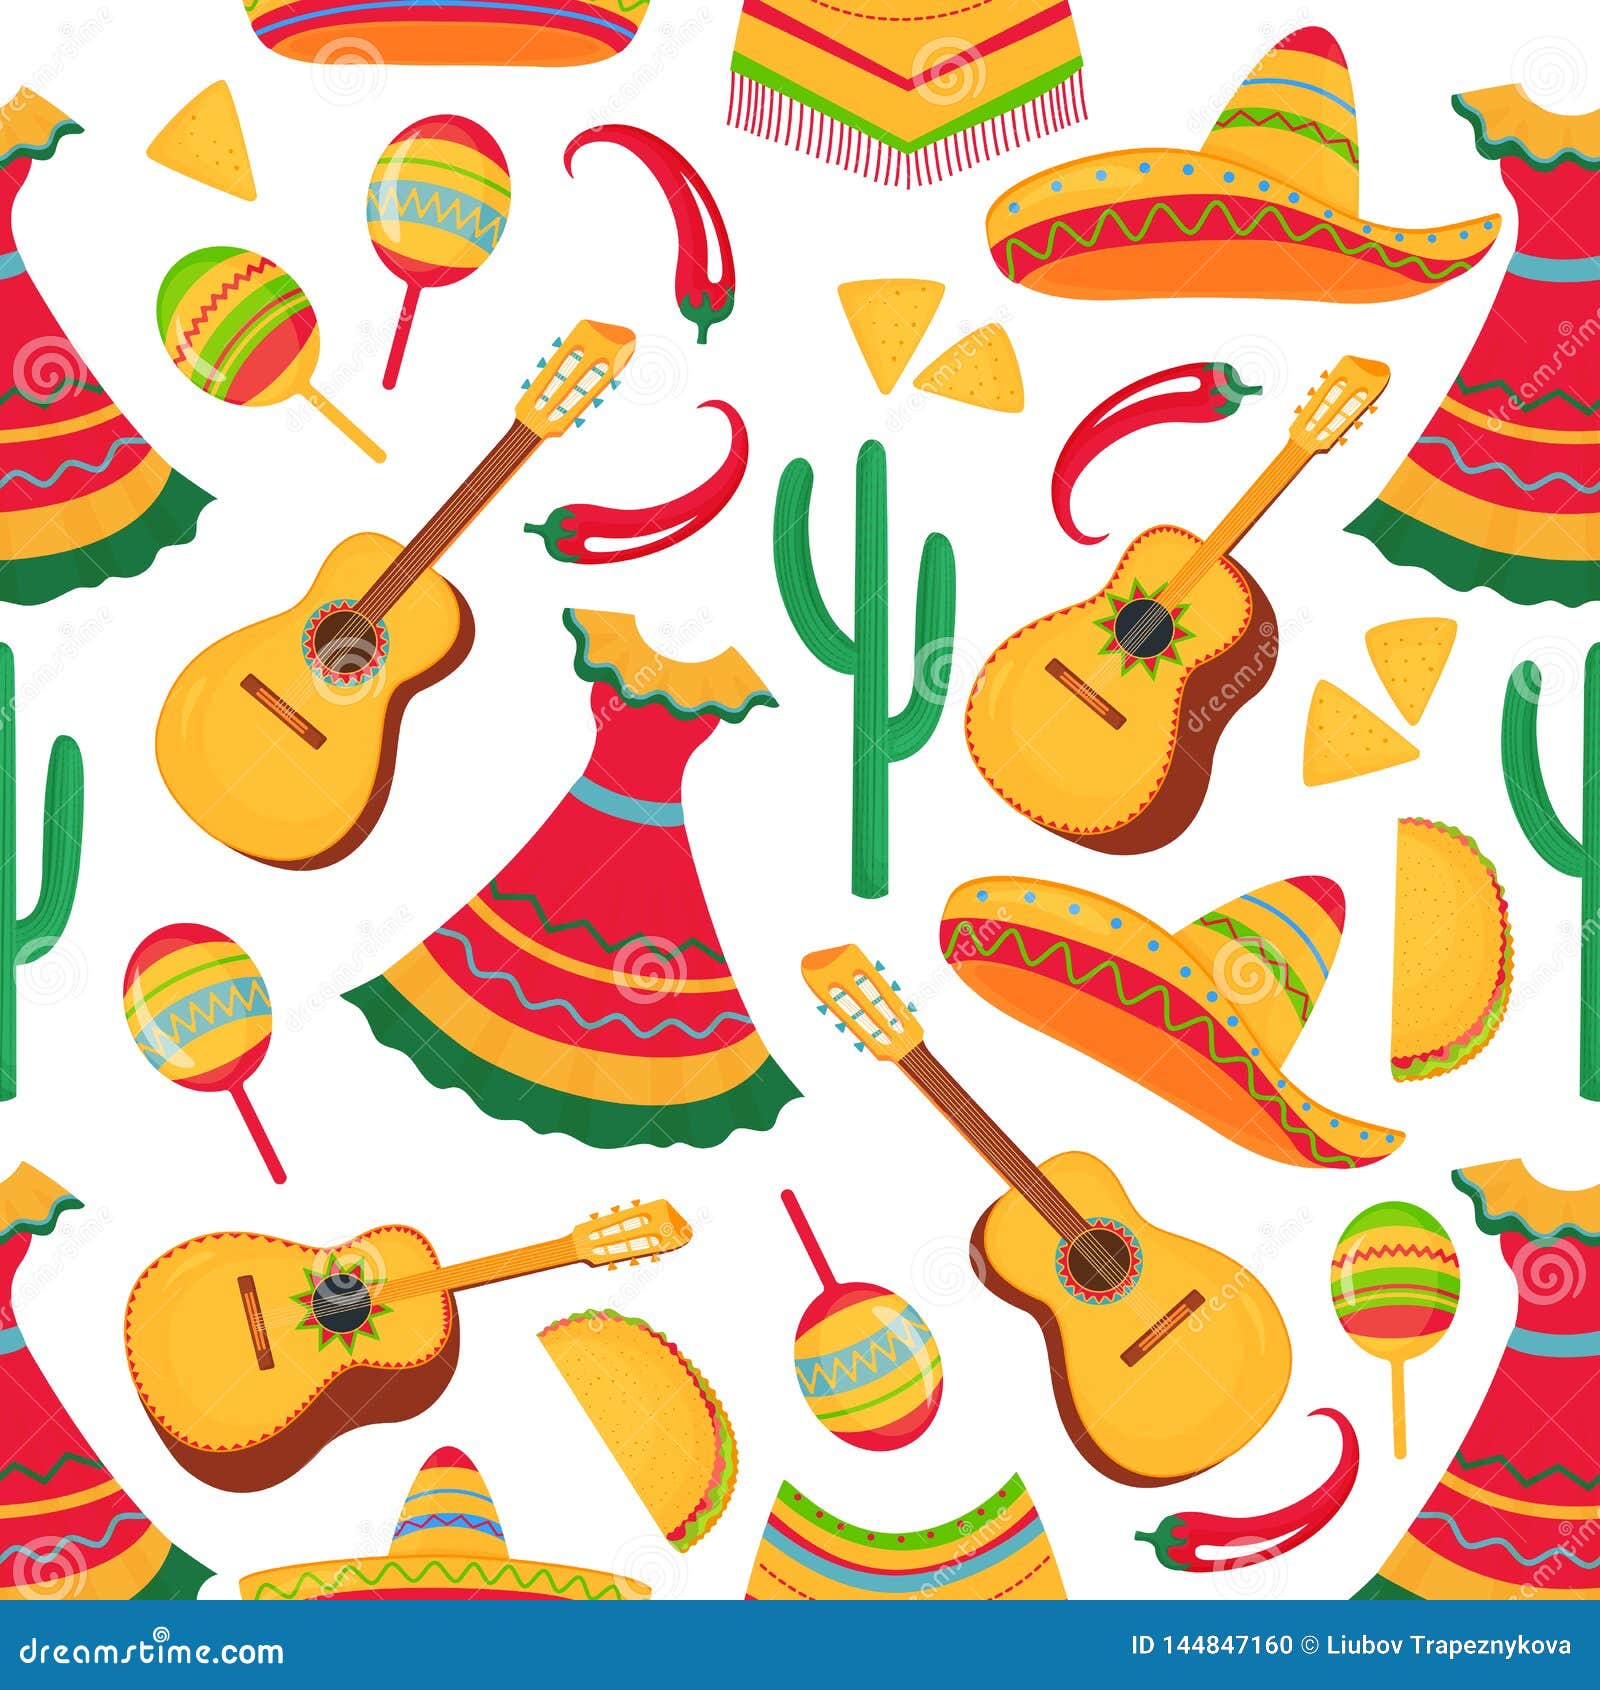 Guitar, Maracas, Poncho, Cactus, Chili, Sombrero, Taco, Nachos